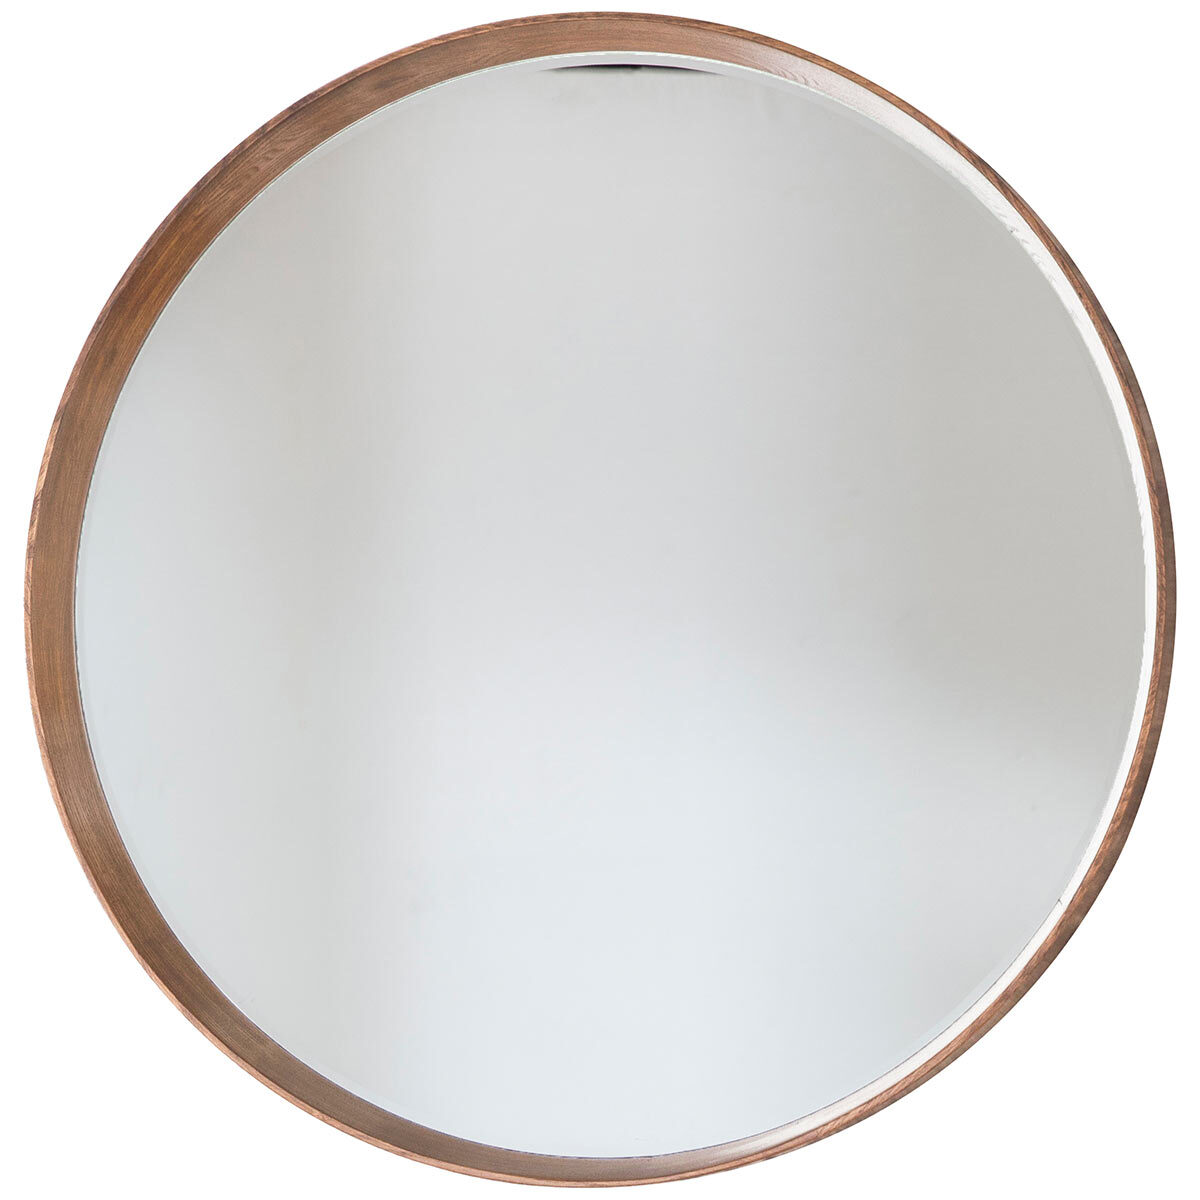 Gallery Keynes oak round mirror